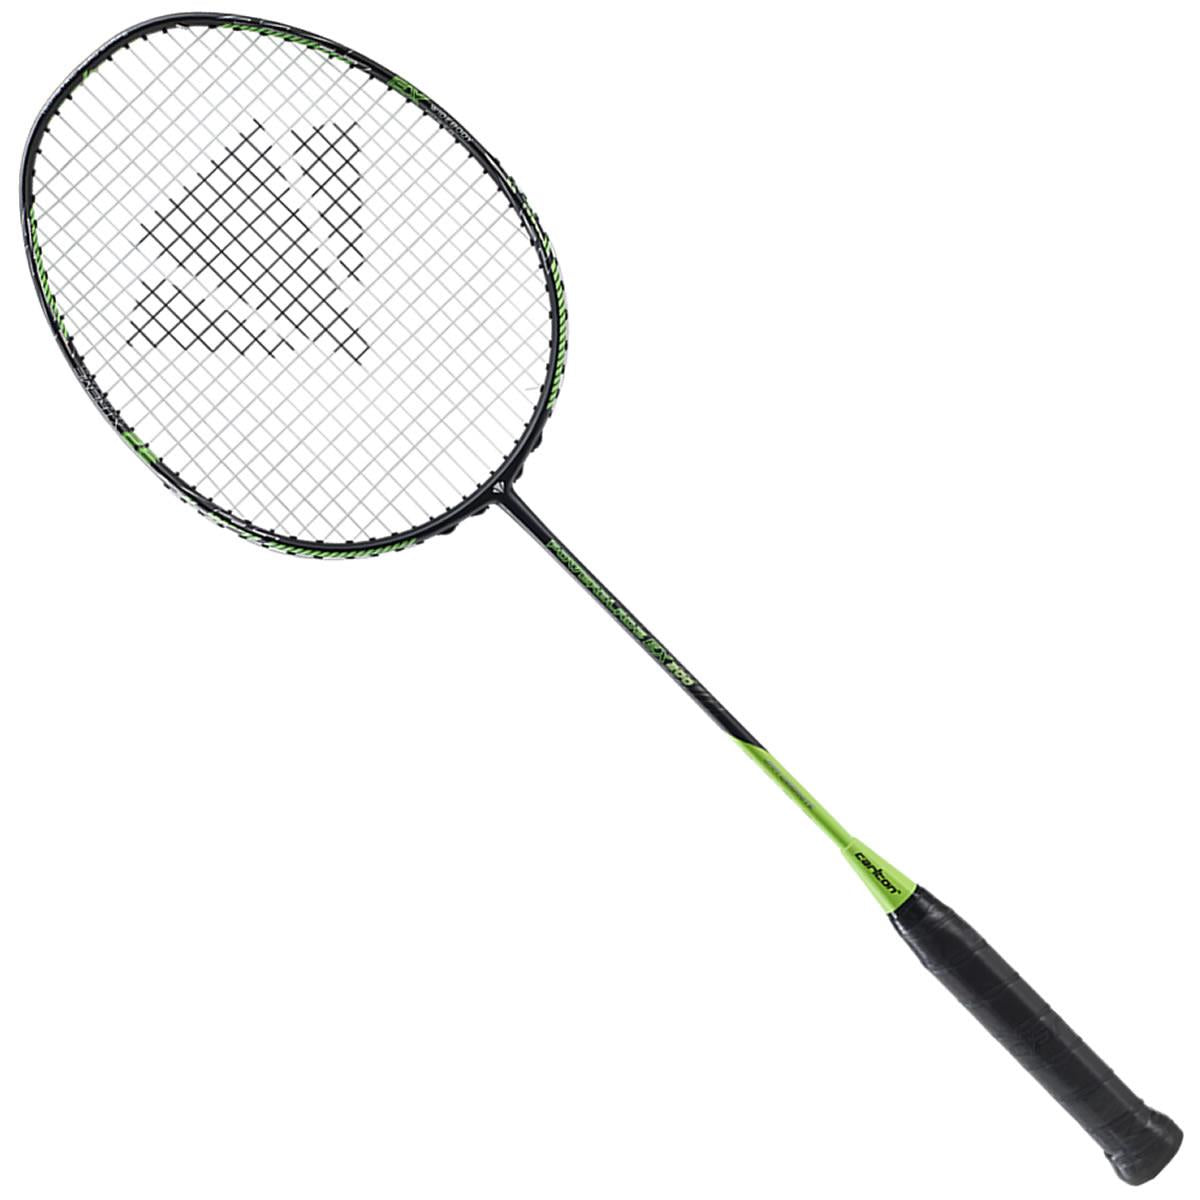 Carlton Powerblade EX300 Badminton Racket